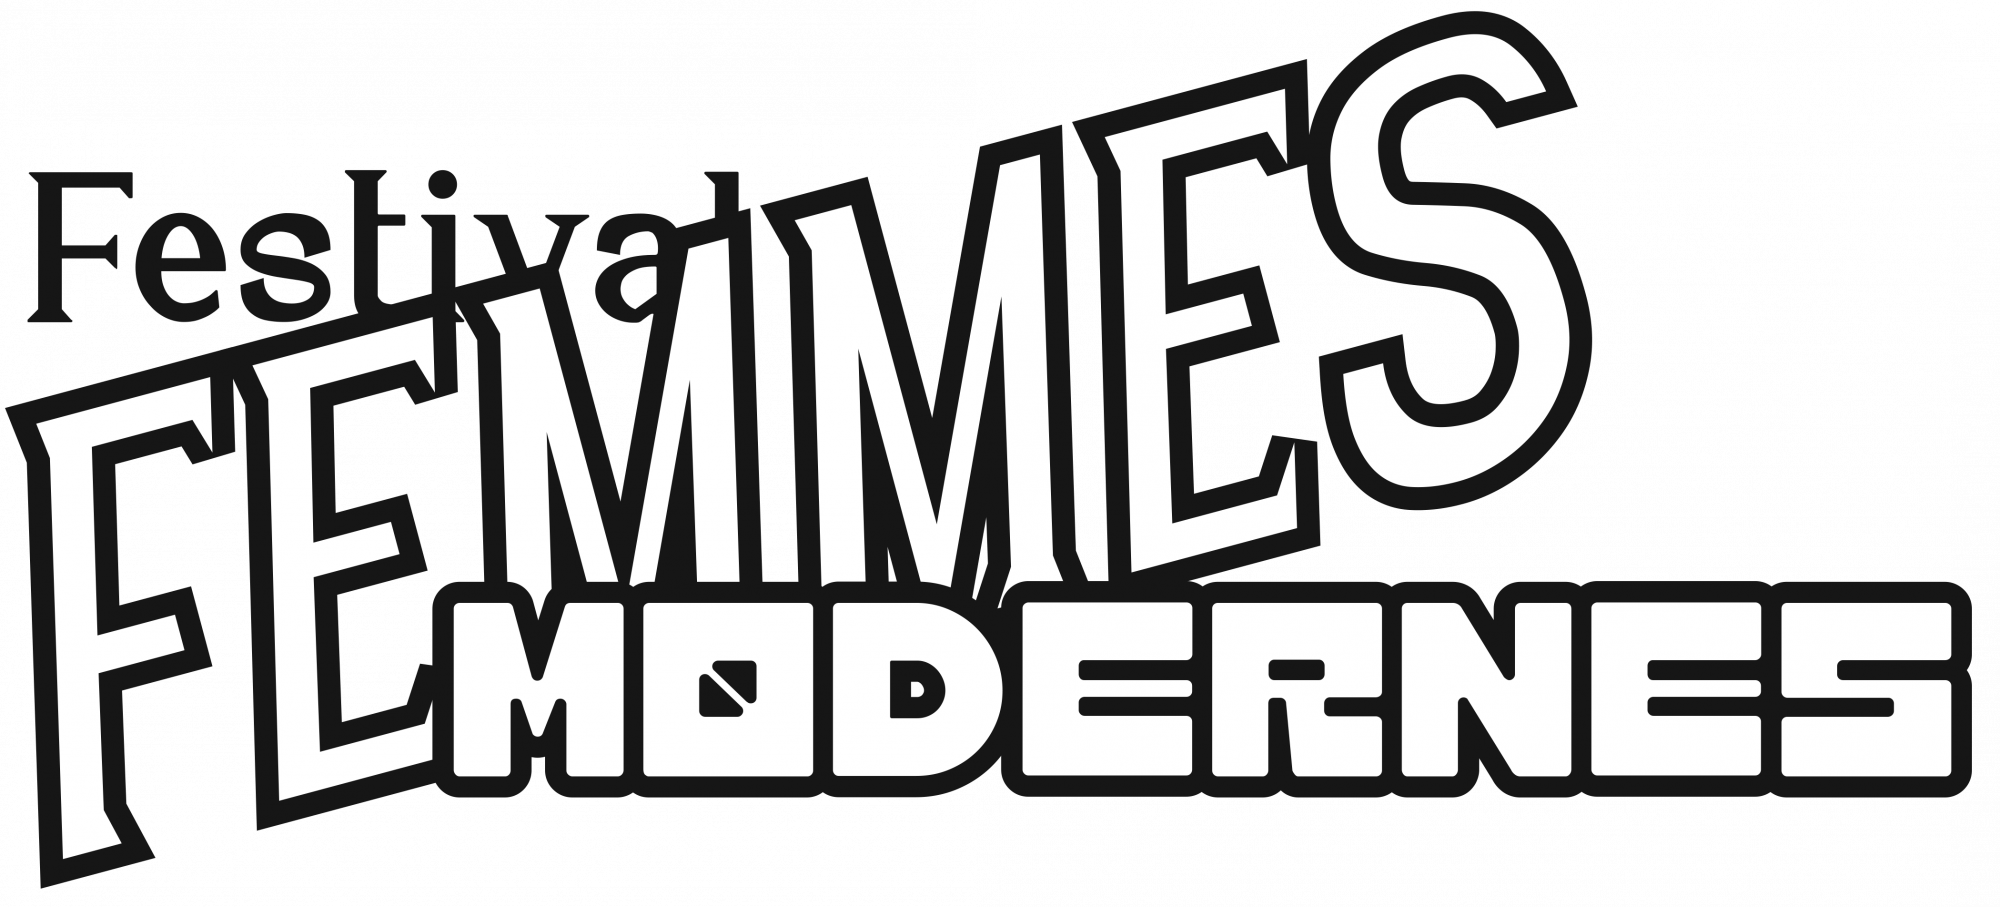 Festival Jeunes Femmes Modernes edition 2020 | canceled